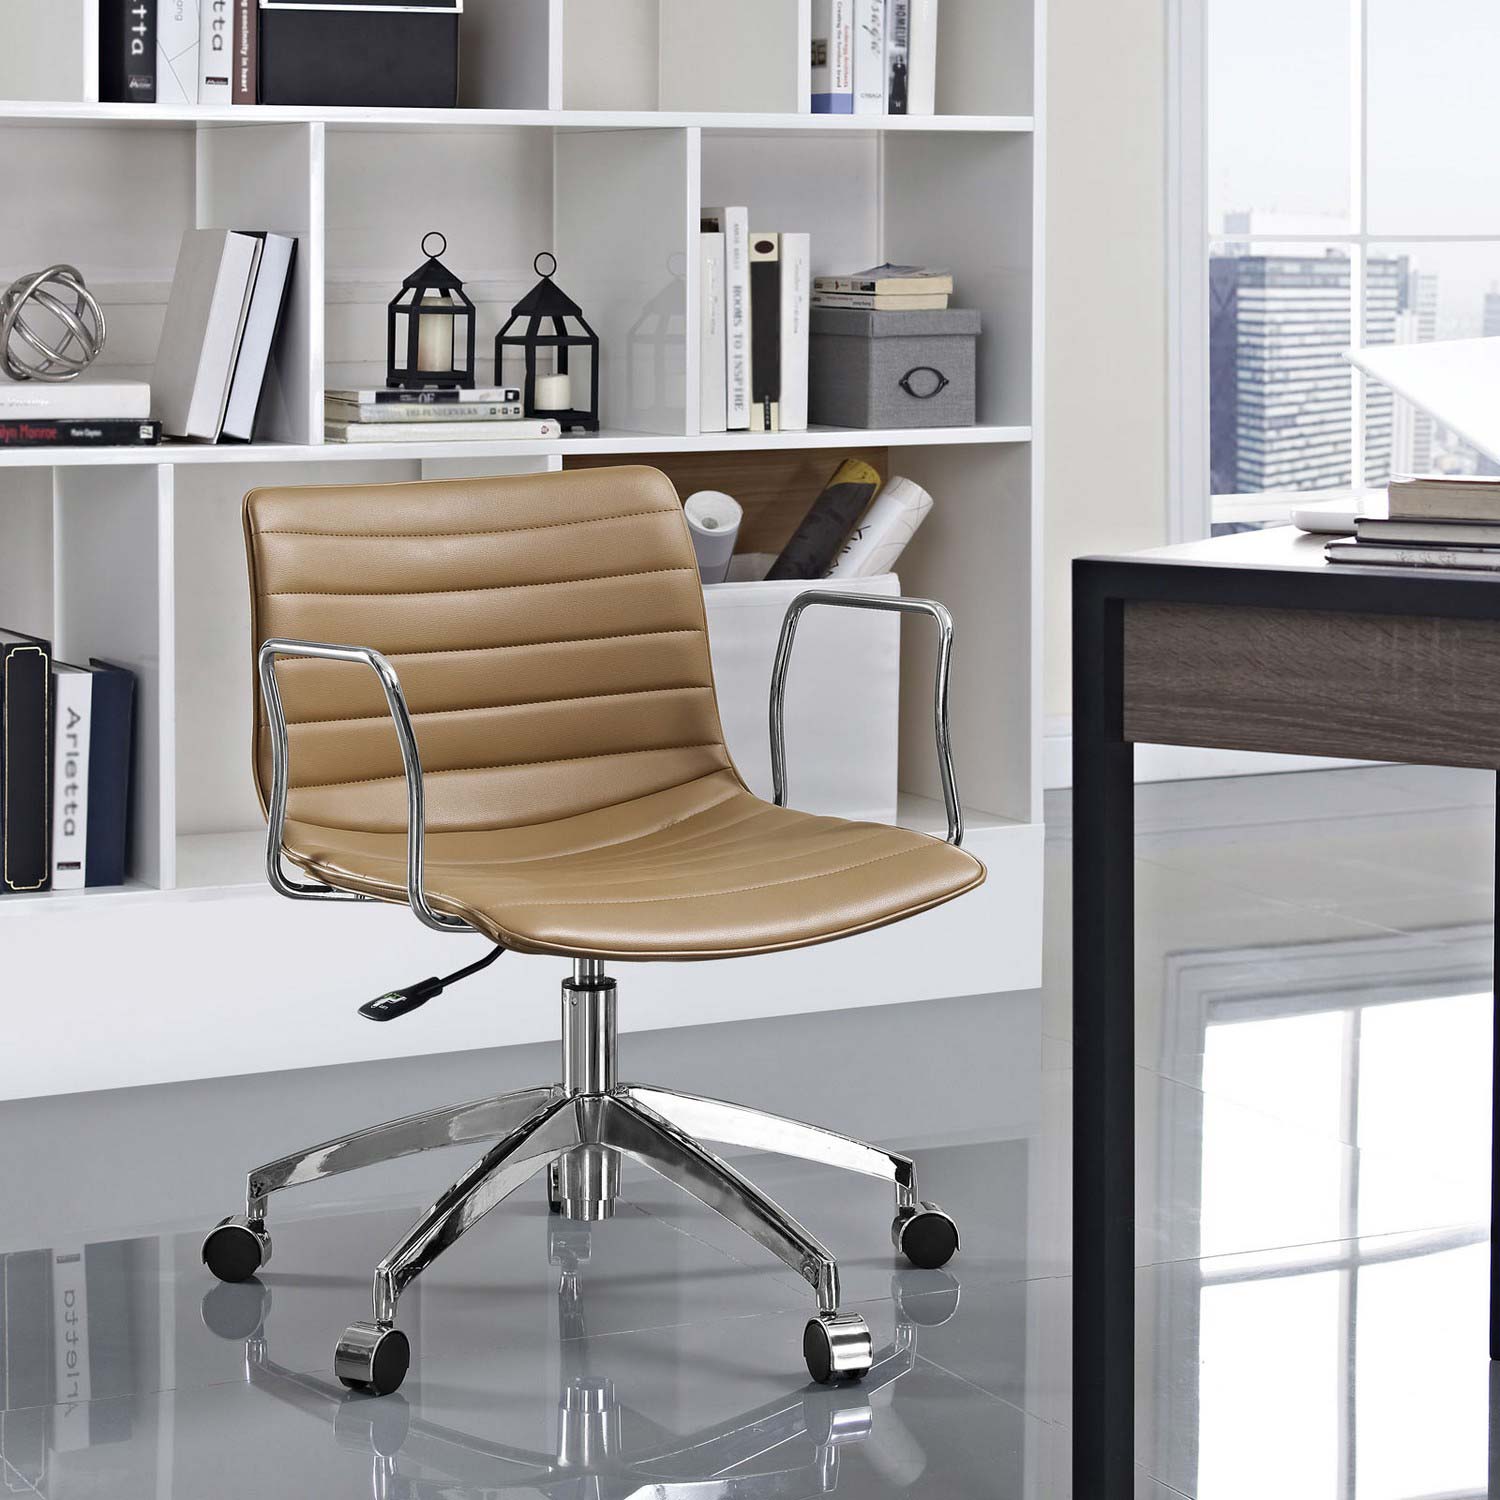 Modway Celerity Office Chair - Tan